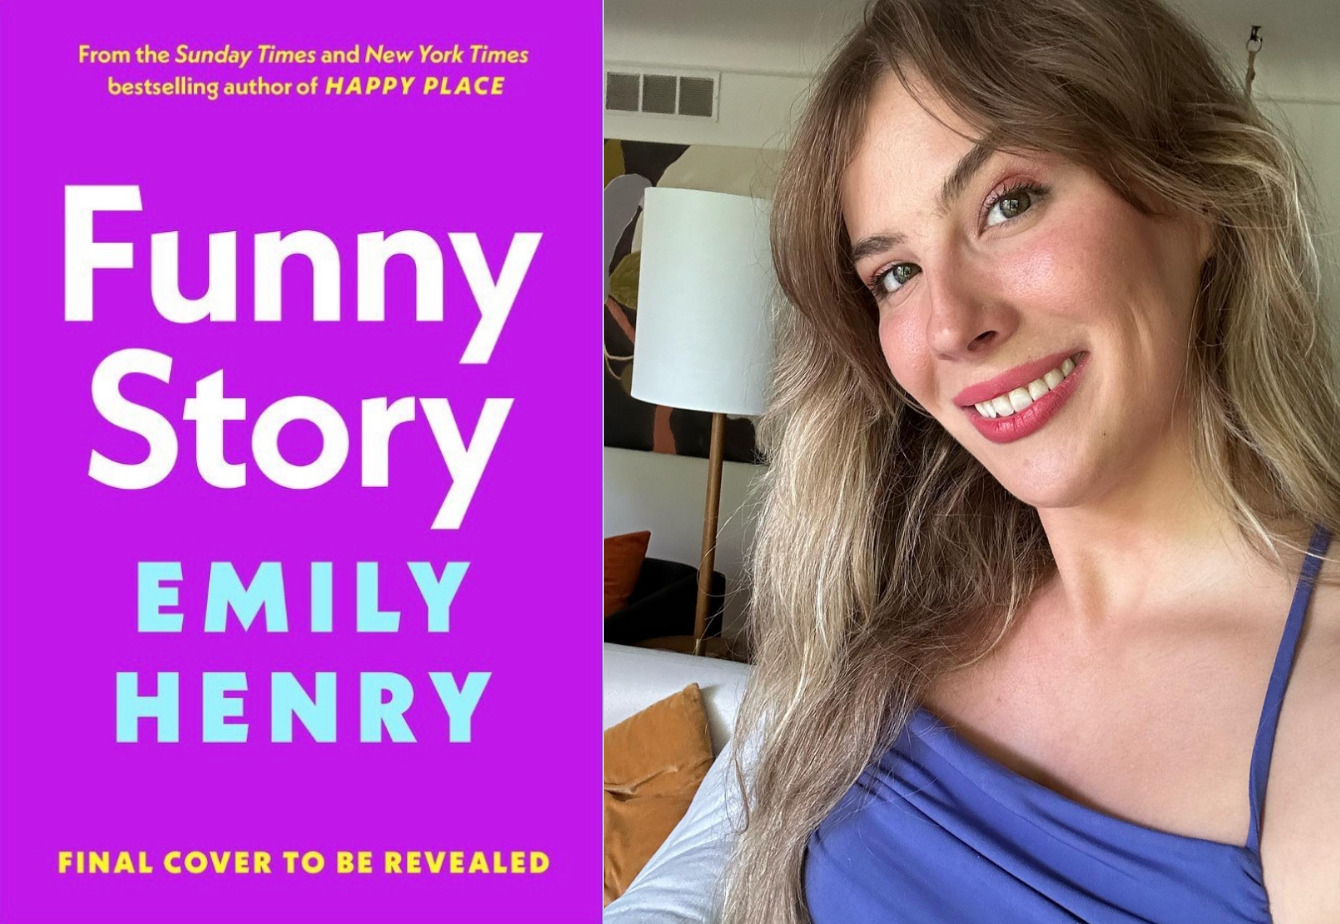 Funny Story by Emily Henry